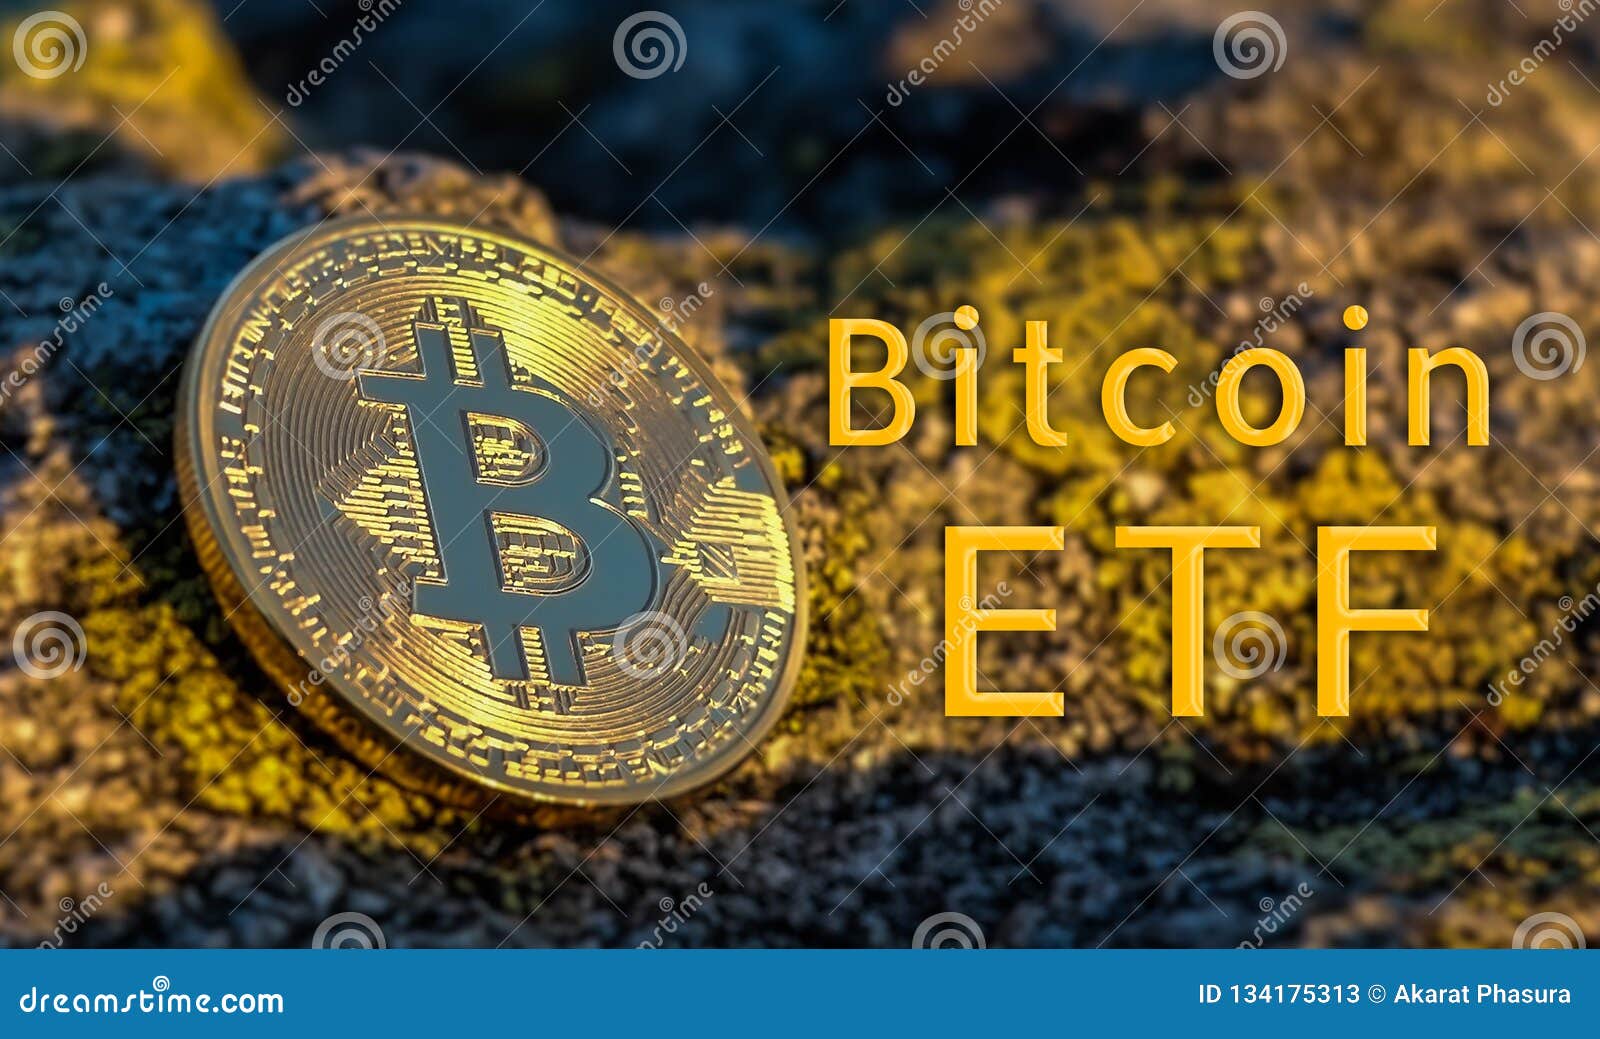 bitcoin etf options